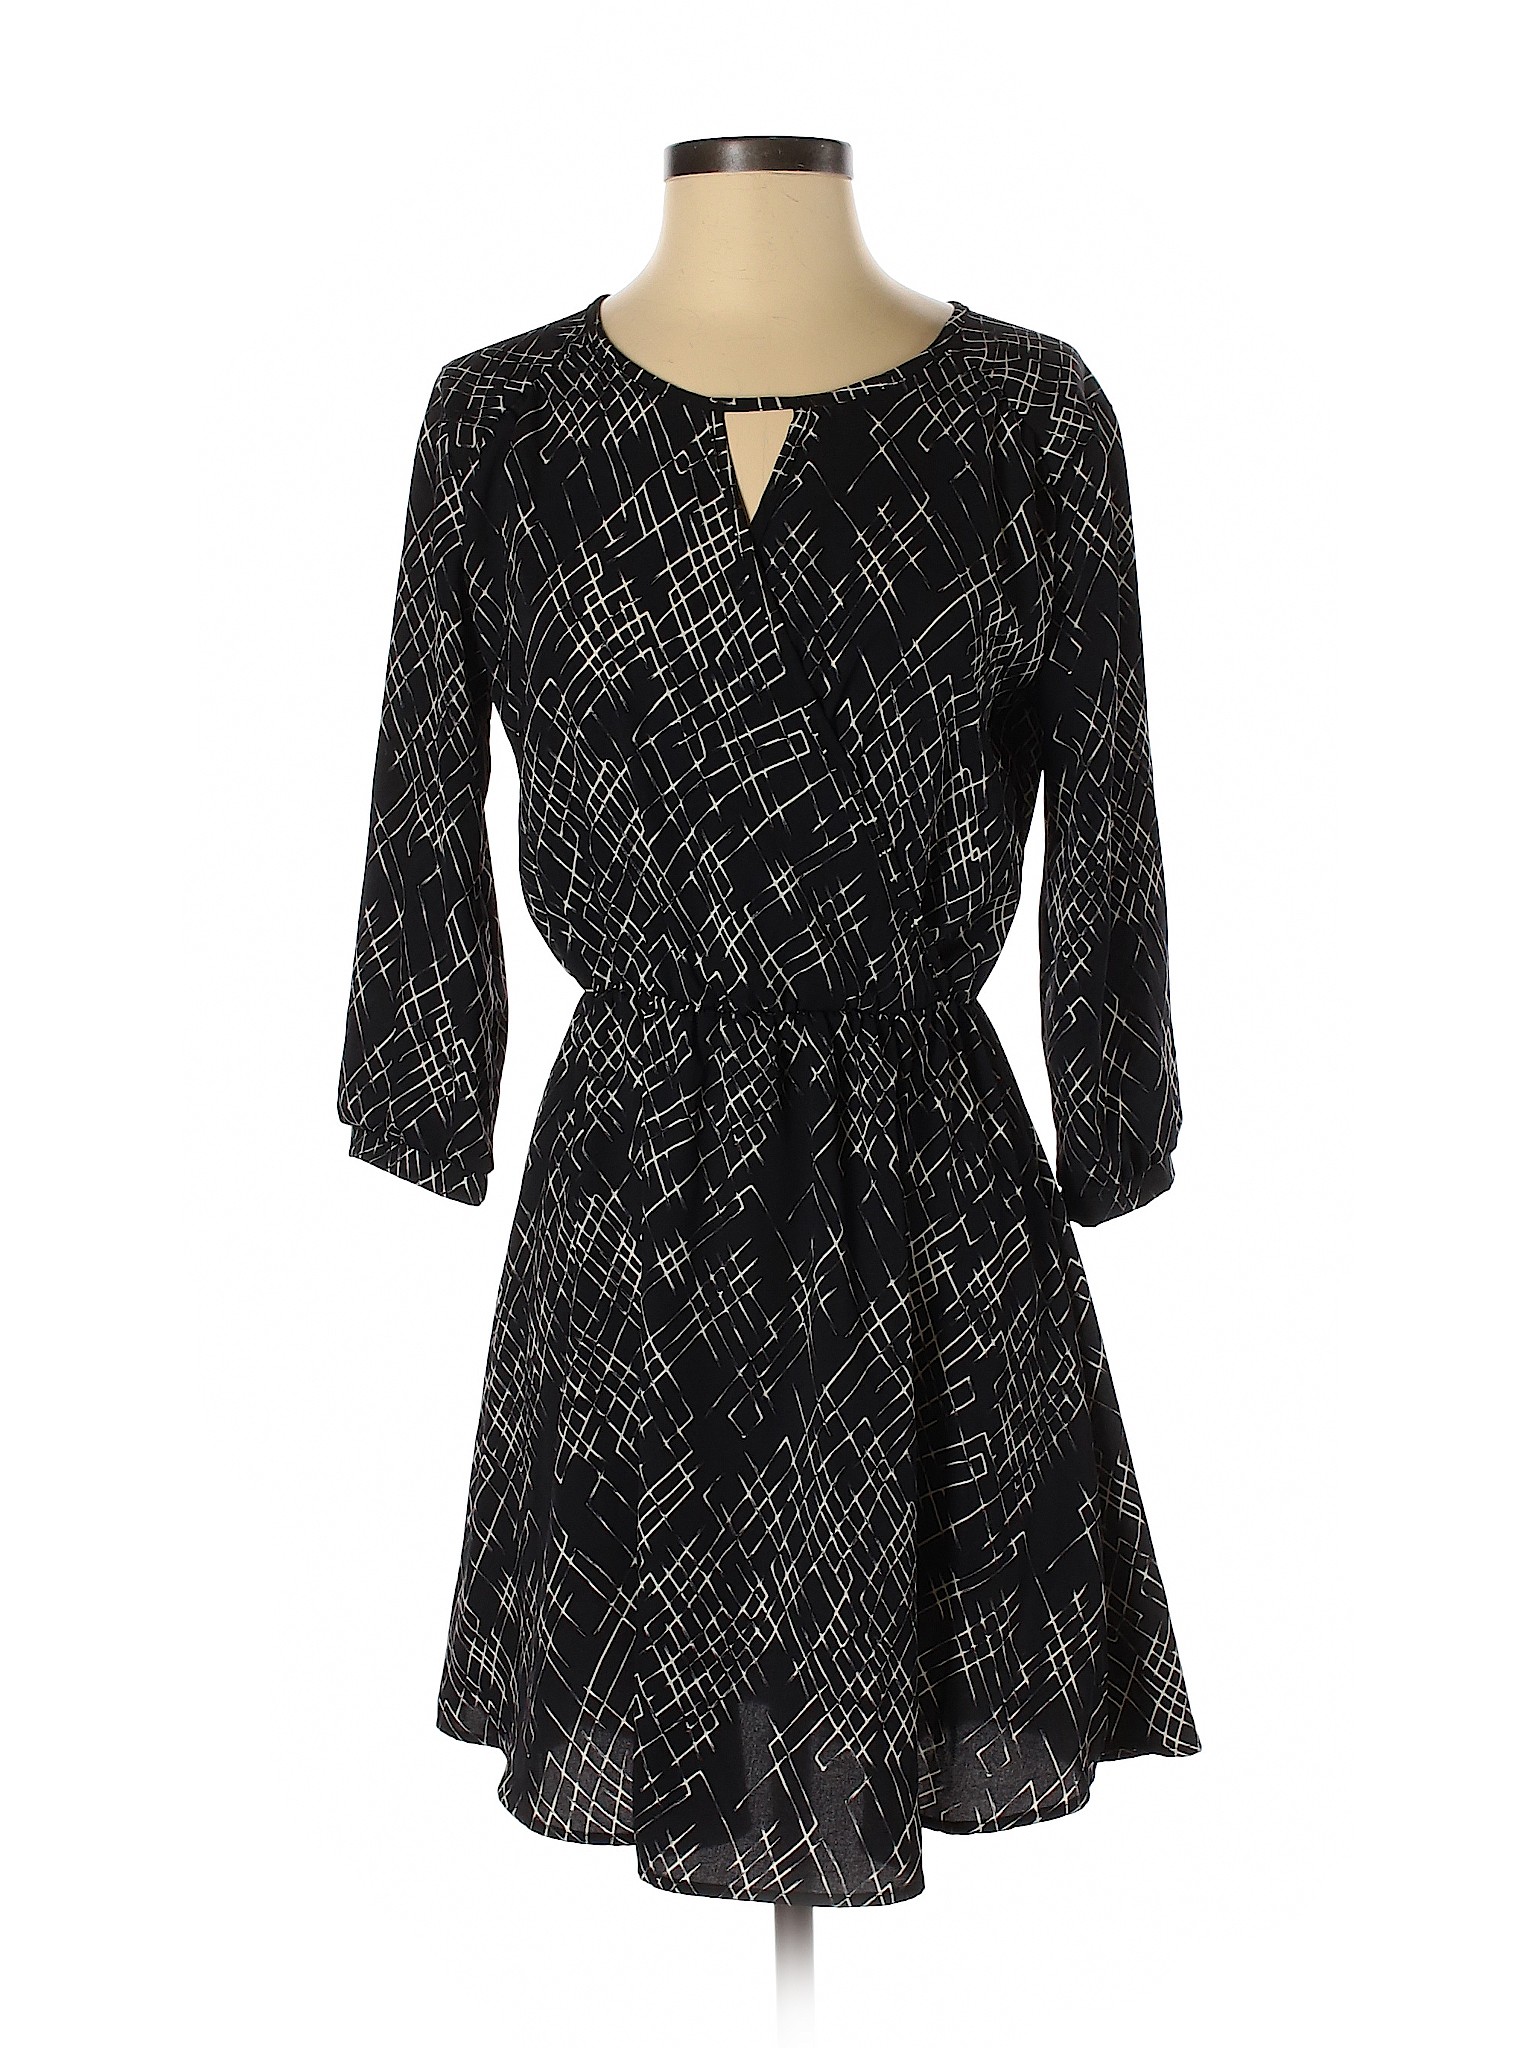 Lush Women Black Casual Dress S | eBay